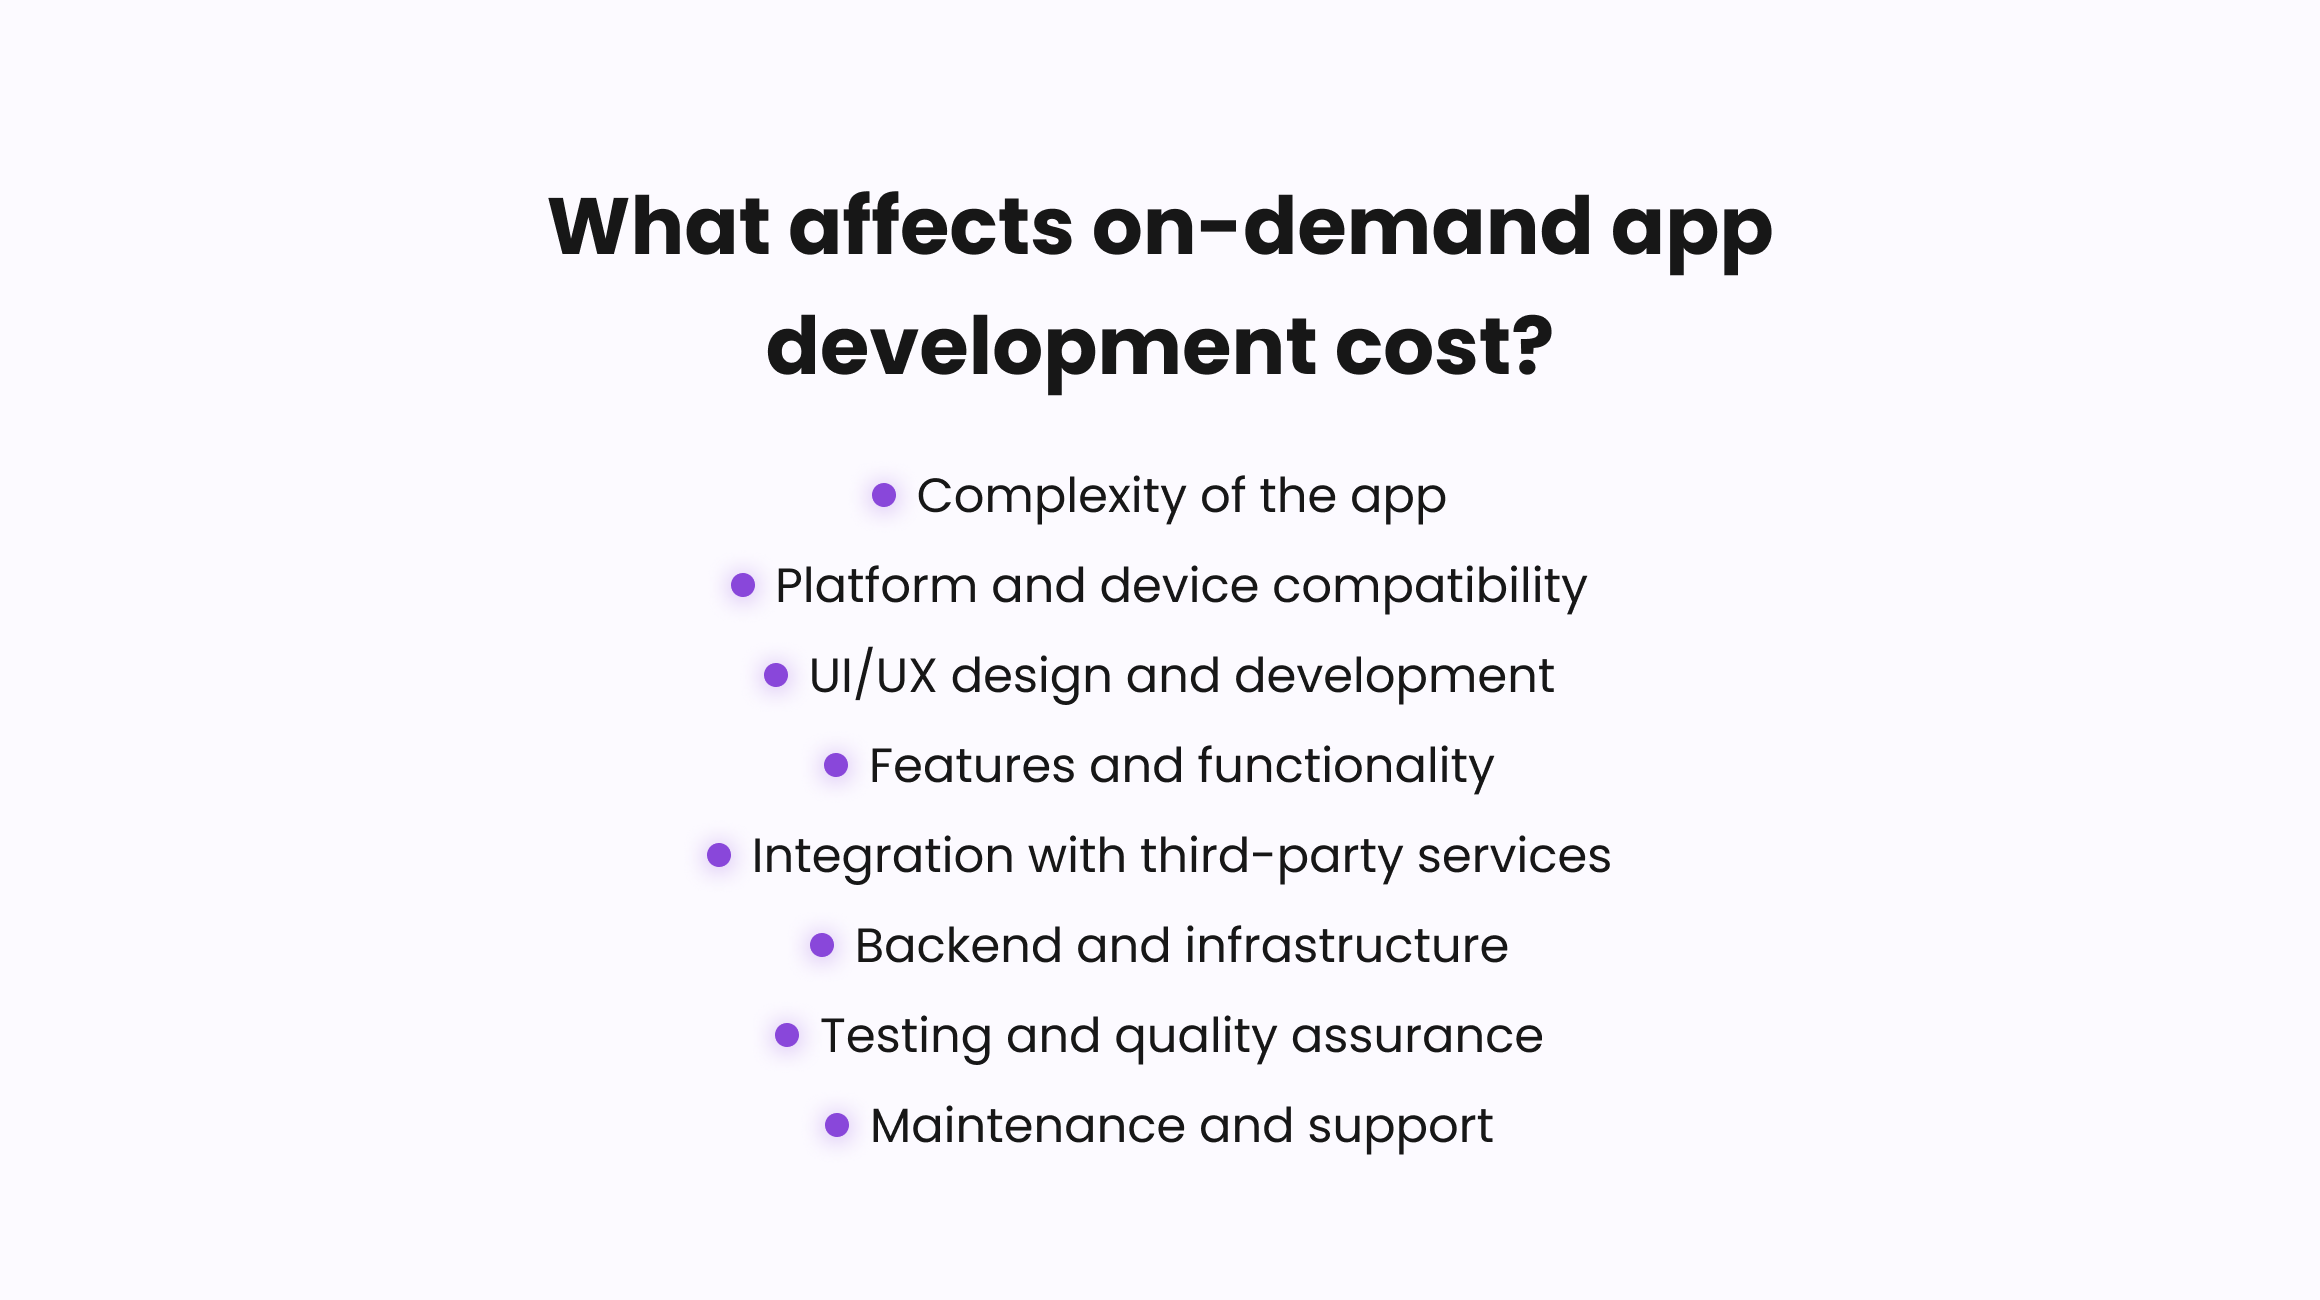 Factors that affect on-demand app development cost